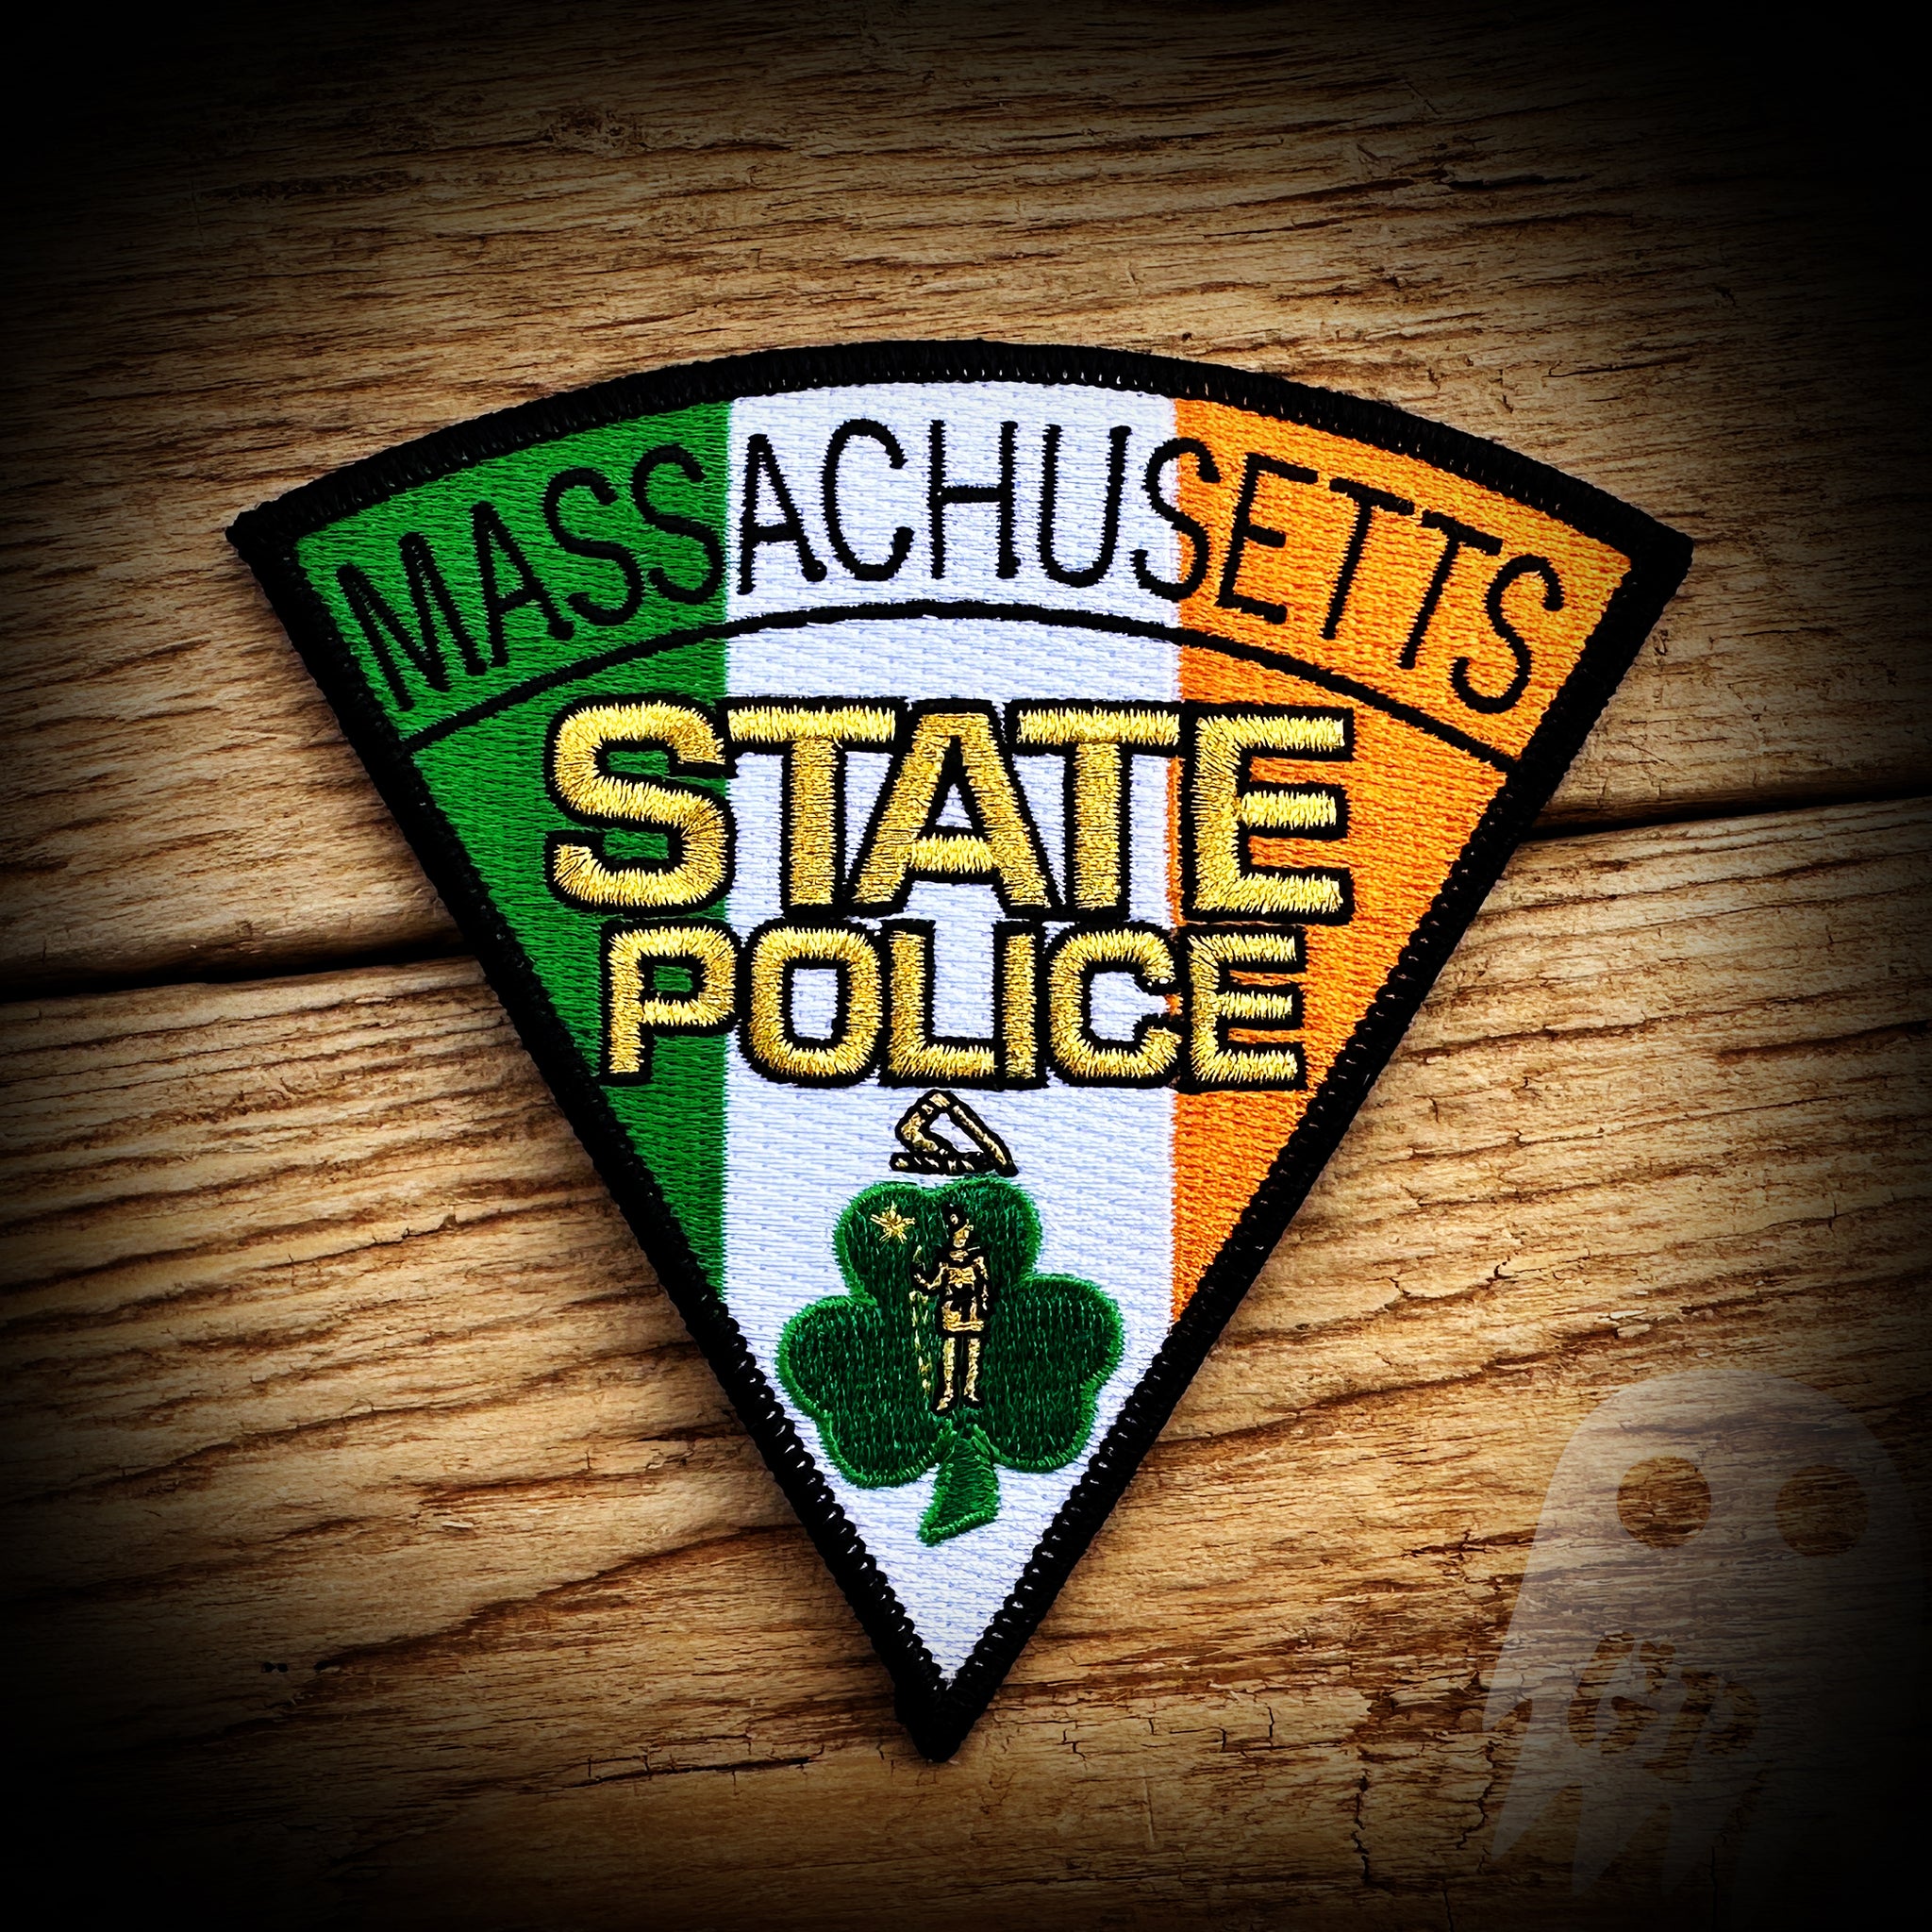 Irish - Mass State Police Irish Patch